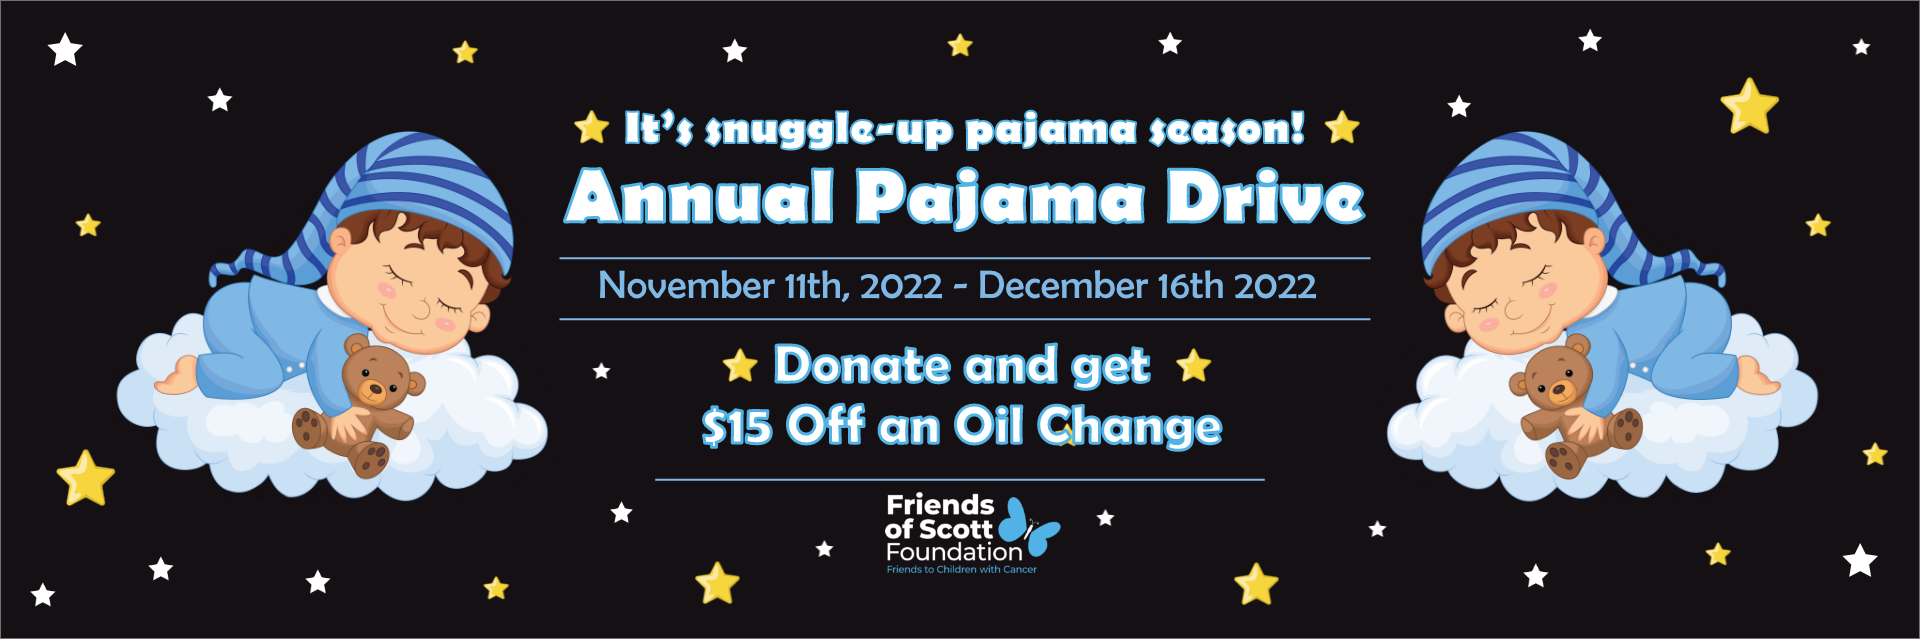 Pajama Drive Page Banner